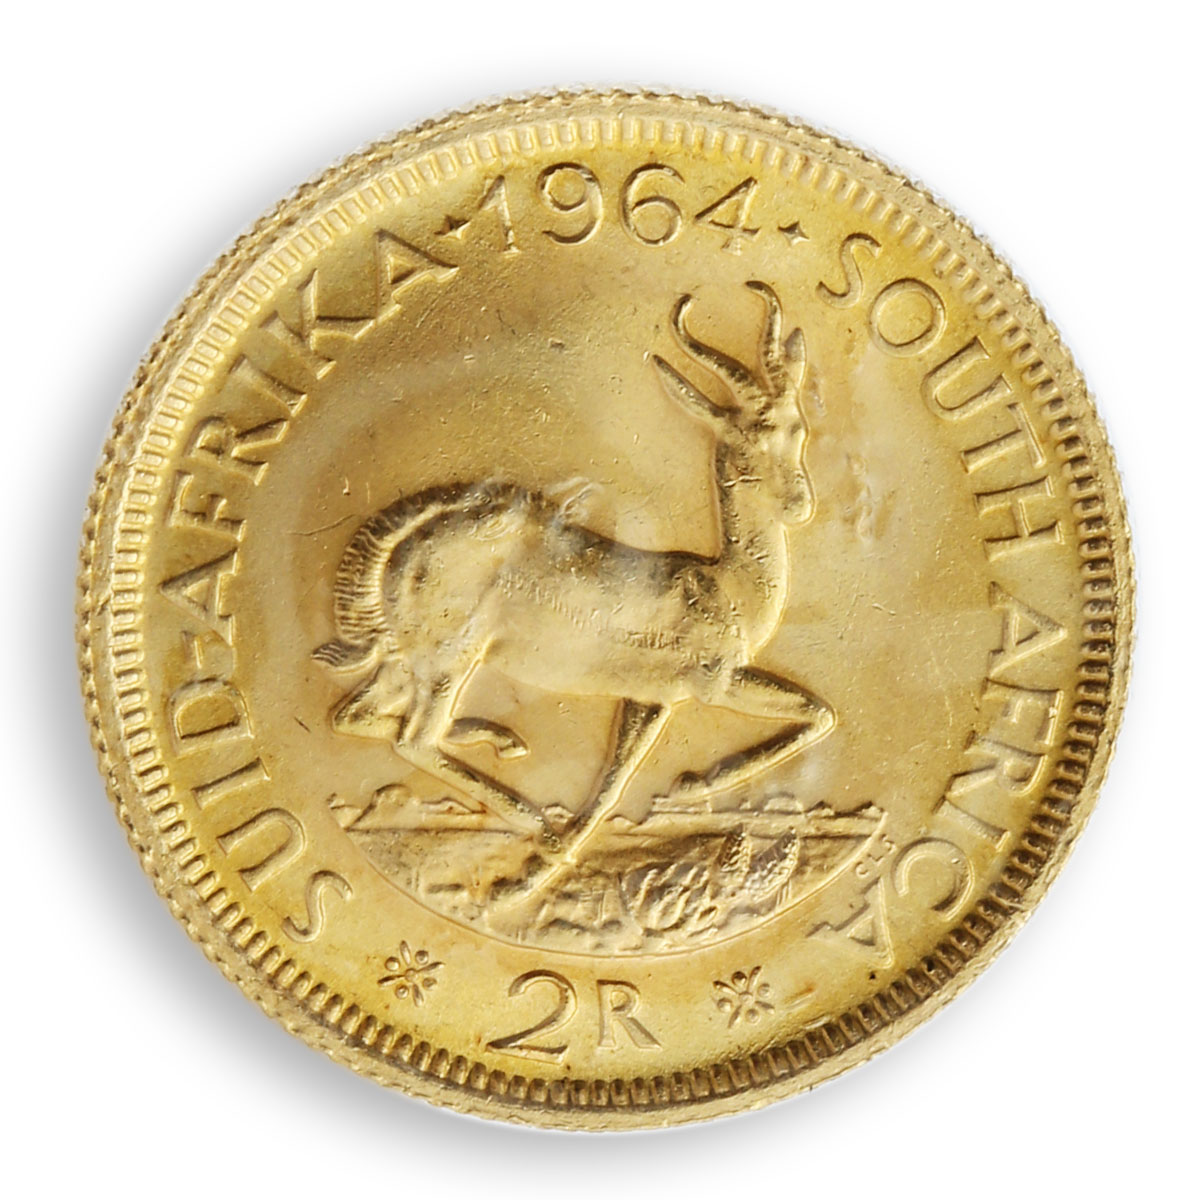 South Africa 2 rand Jan van Riebeeck Suid-Afrika Springbok gold coin 1964